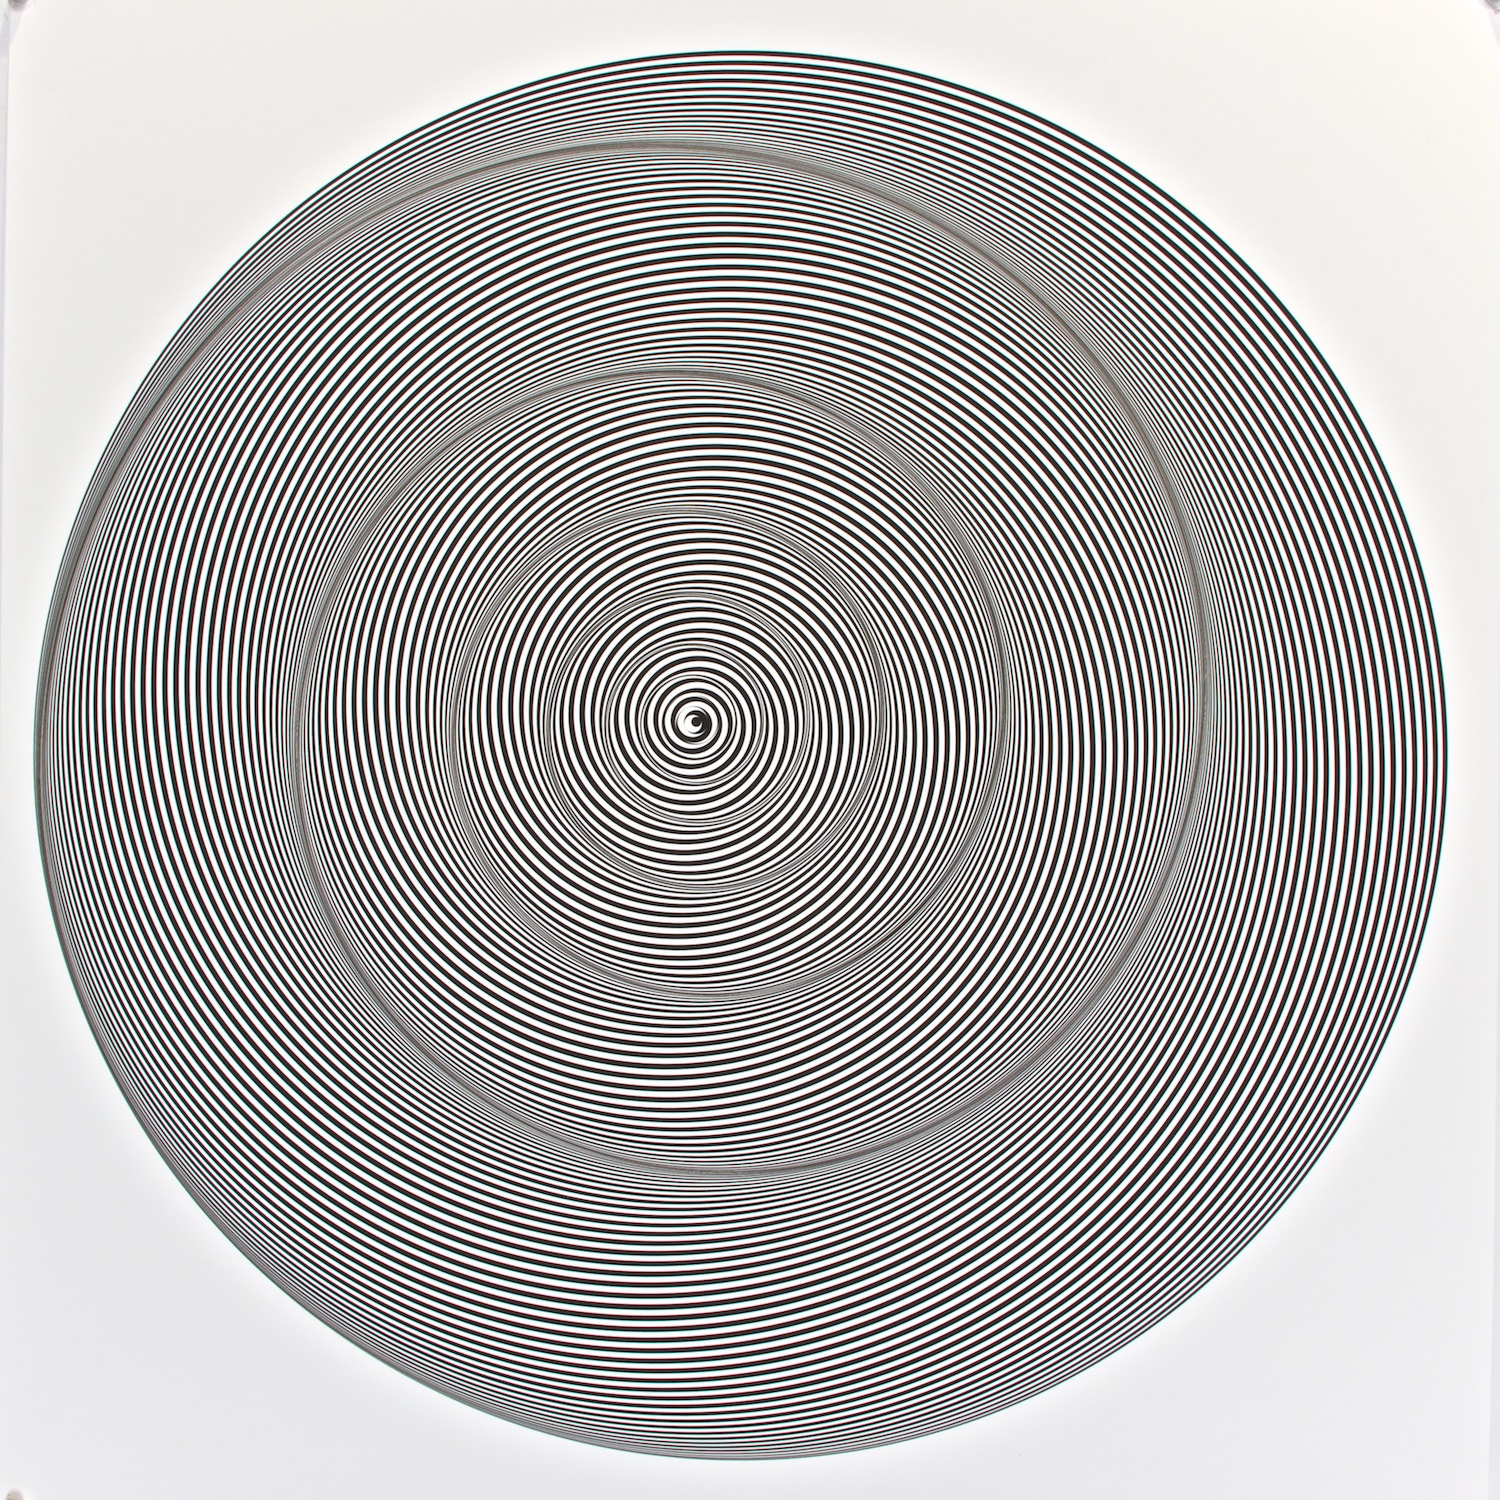   &nbsp;  Metagonal Crescents ~255~ Simple Black  , 2014    Digital drawing, inkjet pigments    Art: 22.75” x 22.75” (58x58 cm)    Paper: 25.25” x 24” Epson UltraSmooth Fine Art Paper  